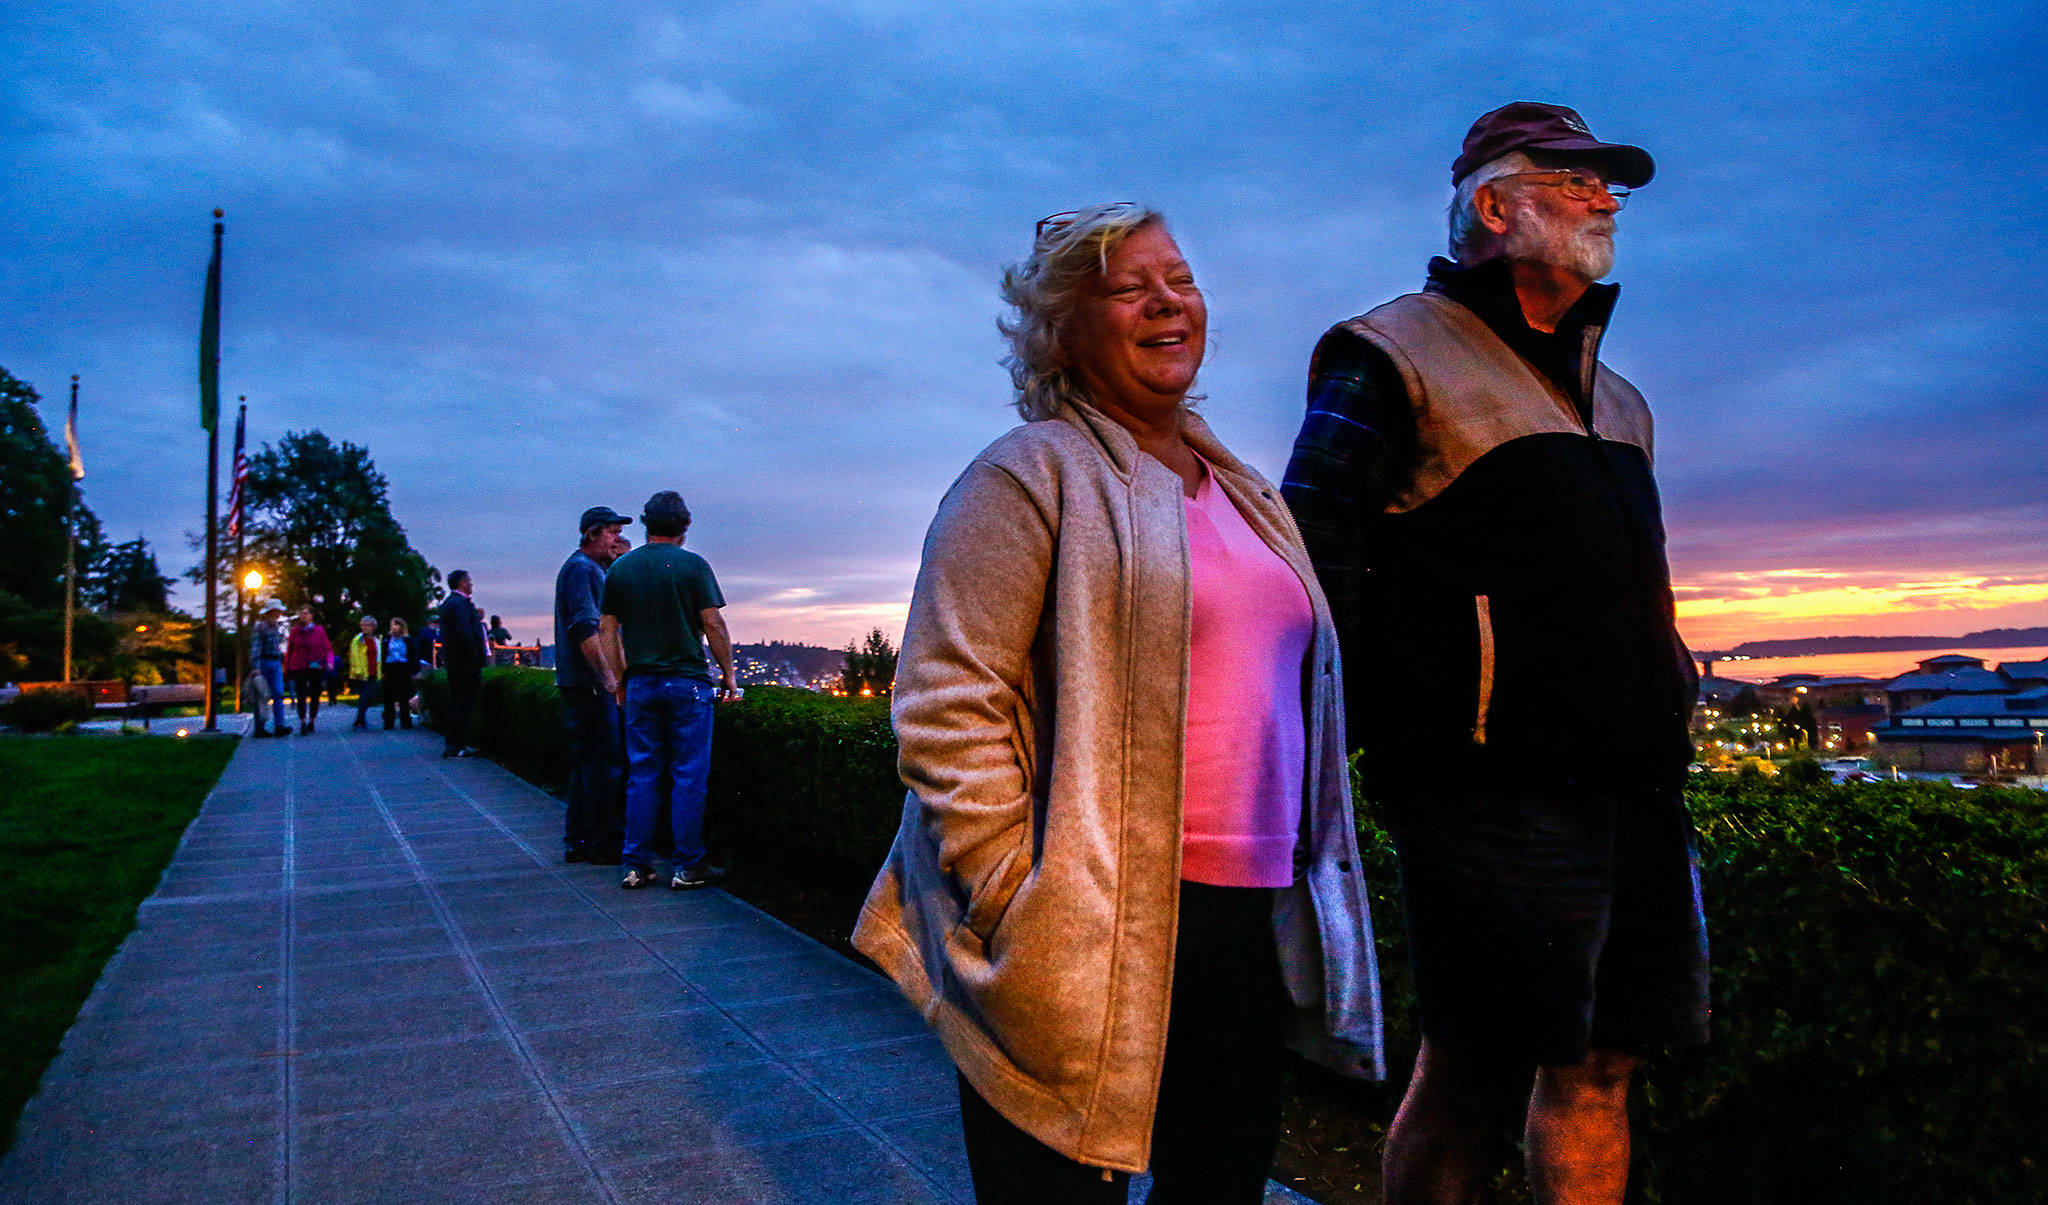 Wowed by footbridge, onlookers share memories of waterfront | HeraldNet.com